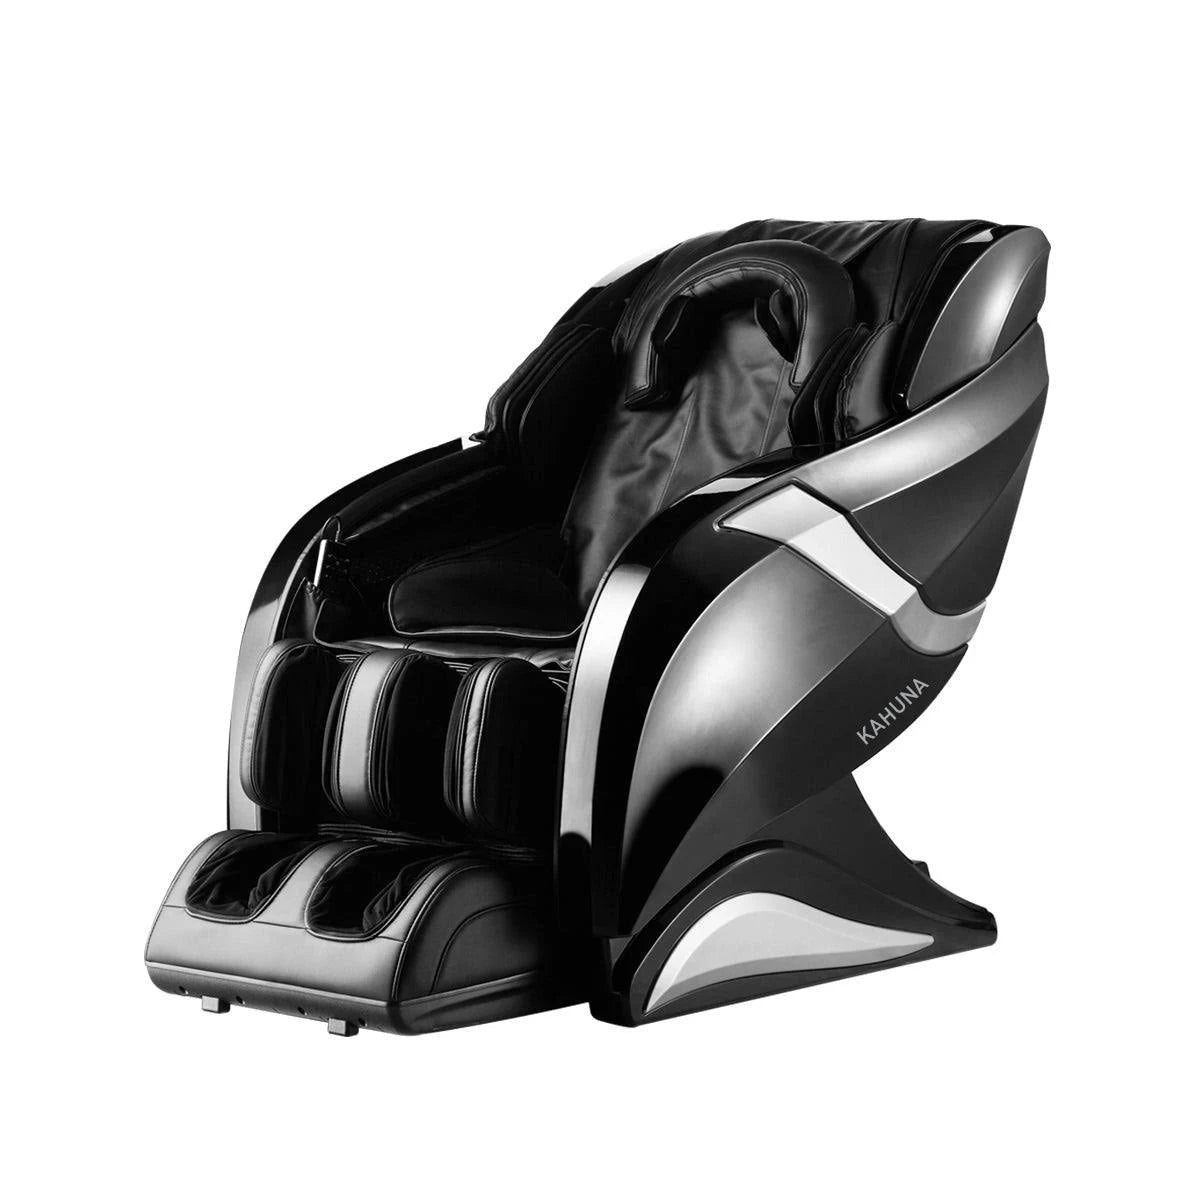 KahunaMassage ChairsKahuna Exquisite Rhythmic 3D Massage Chair (Hubot HM-078)BlackMassage Chair Heaven